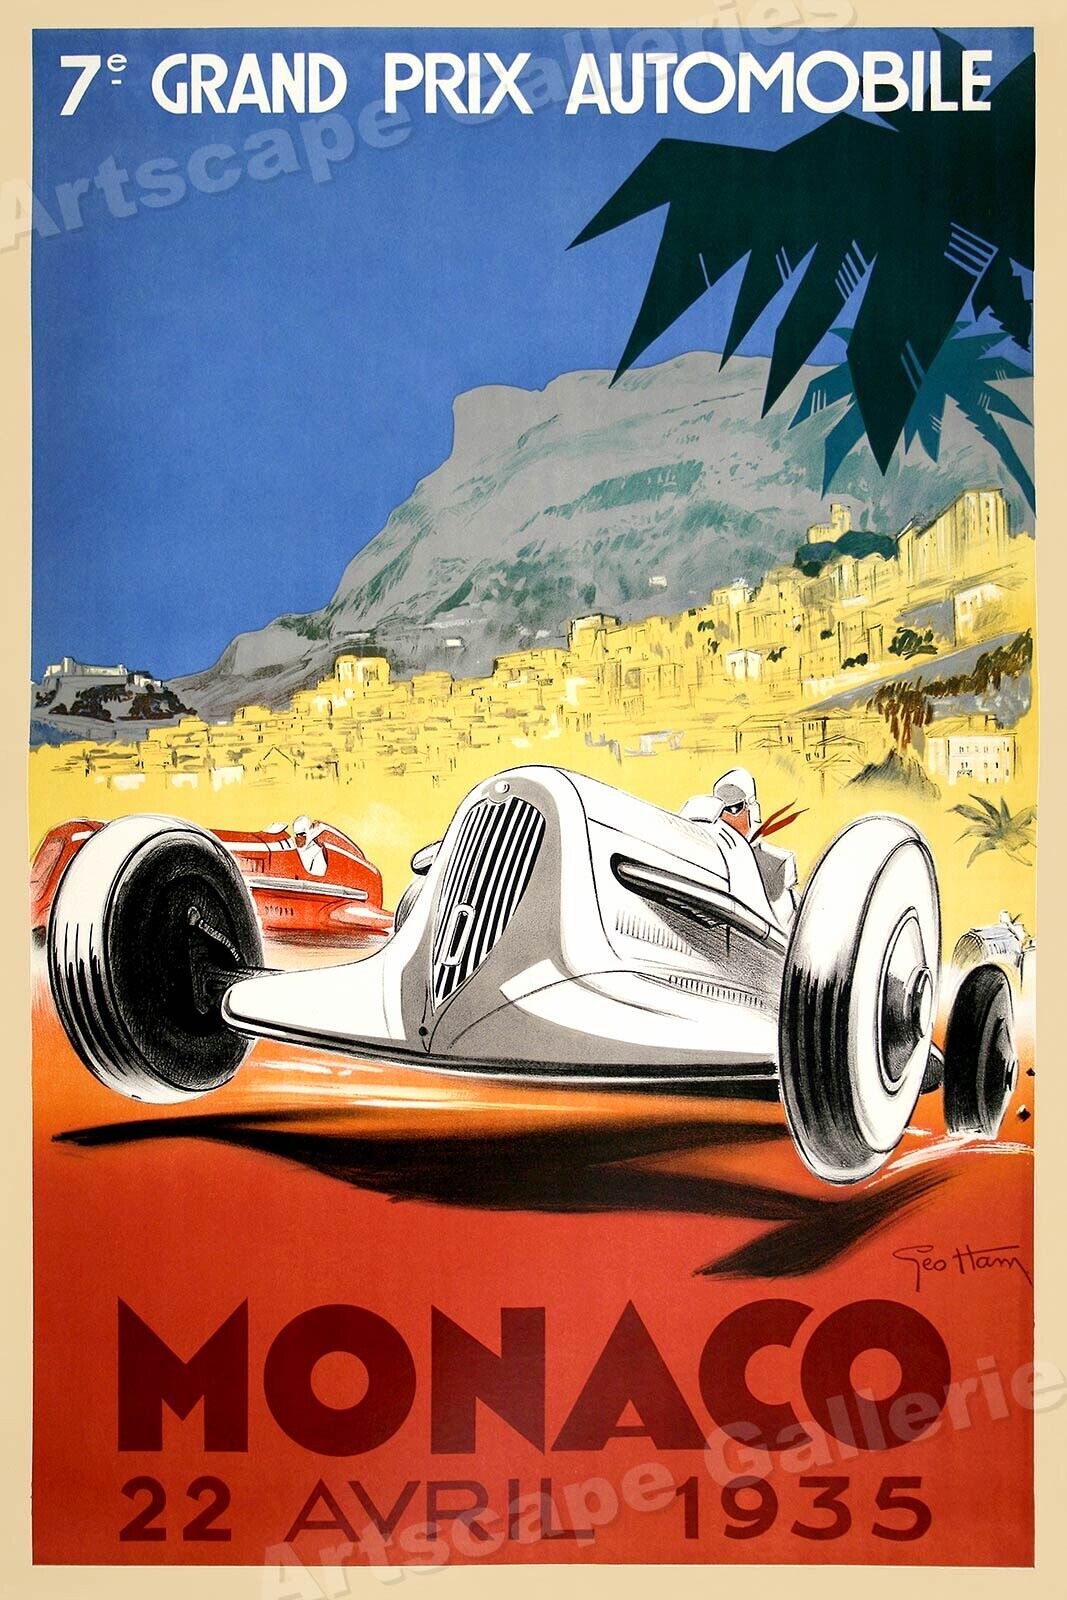 1935 Monaco Grand Prix Road Race Vintage Style Automobile Poster - 20x30